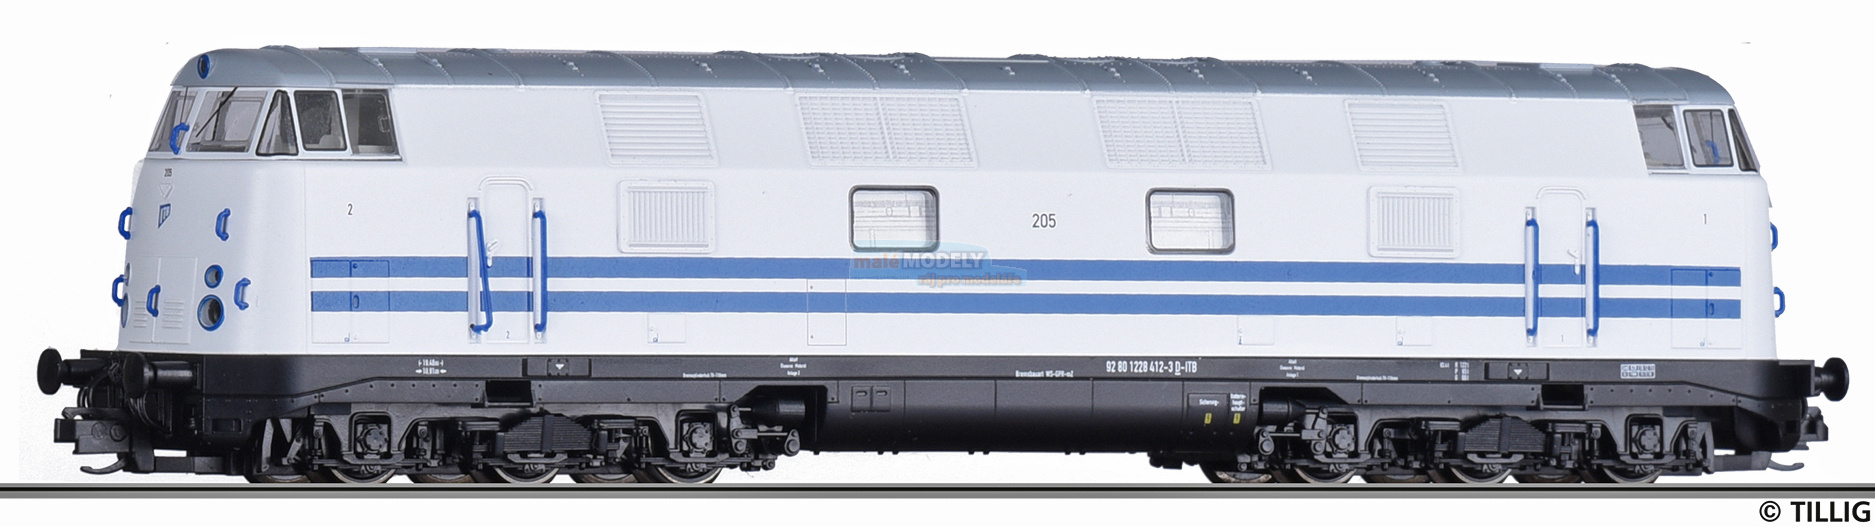 Dieselová lokomotiva 228 412-3, Industrie Transportgesell. Brandenburg mbH - (31.03.2020)